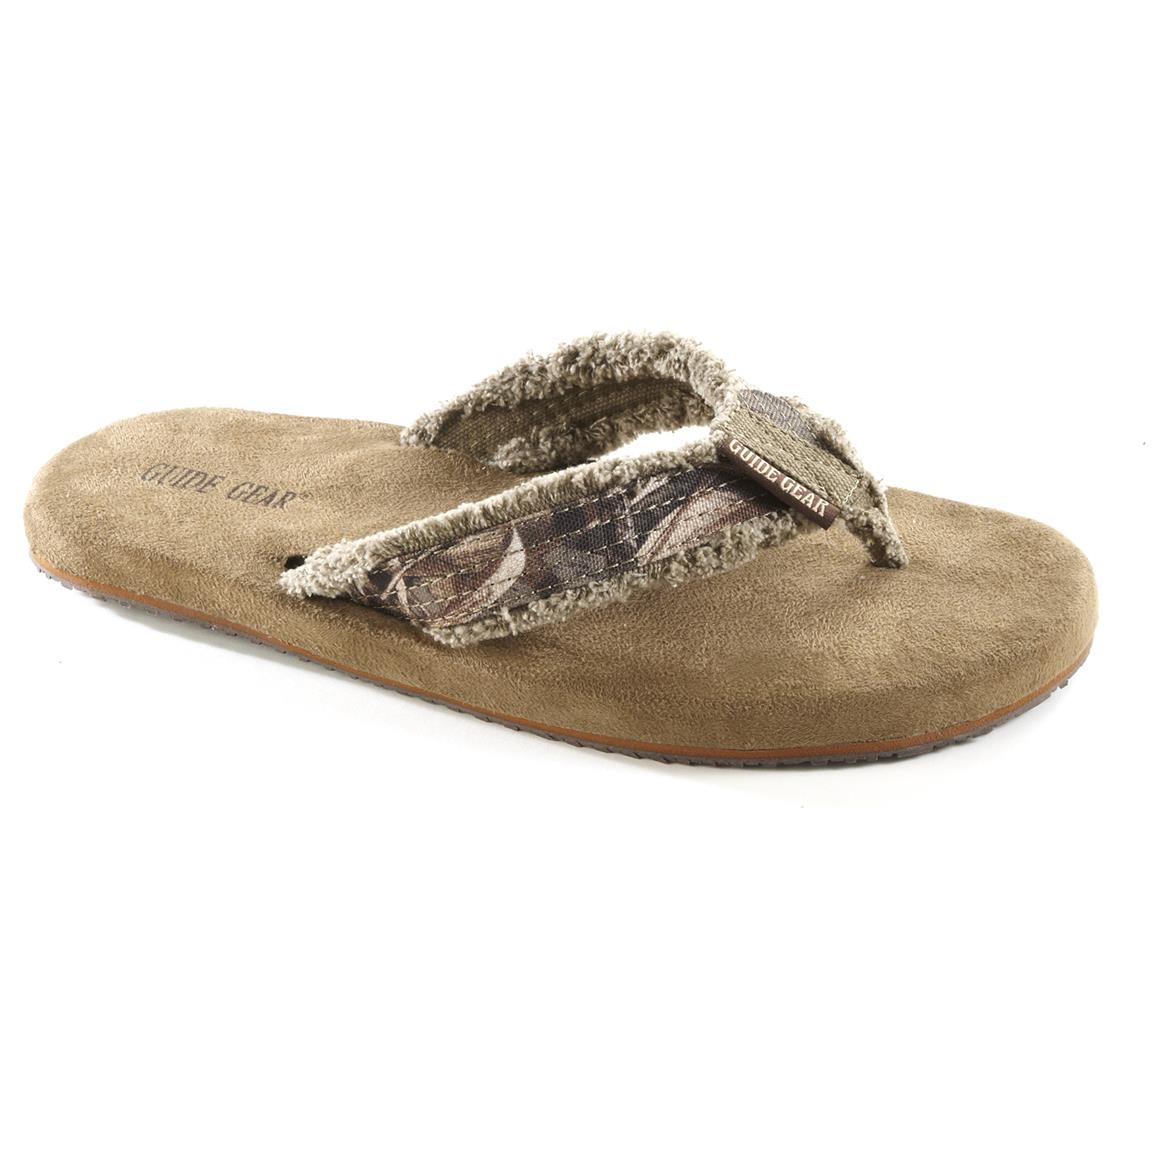 dansko sandals discontinued